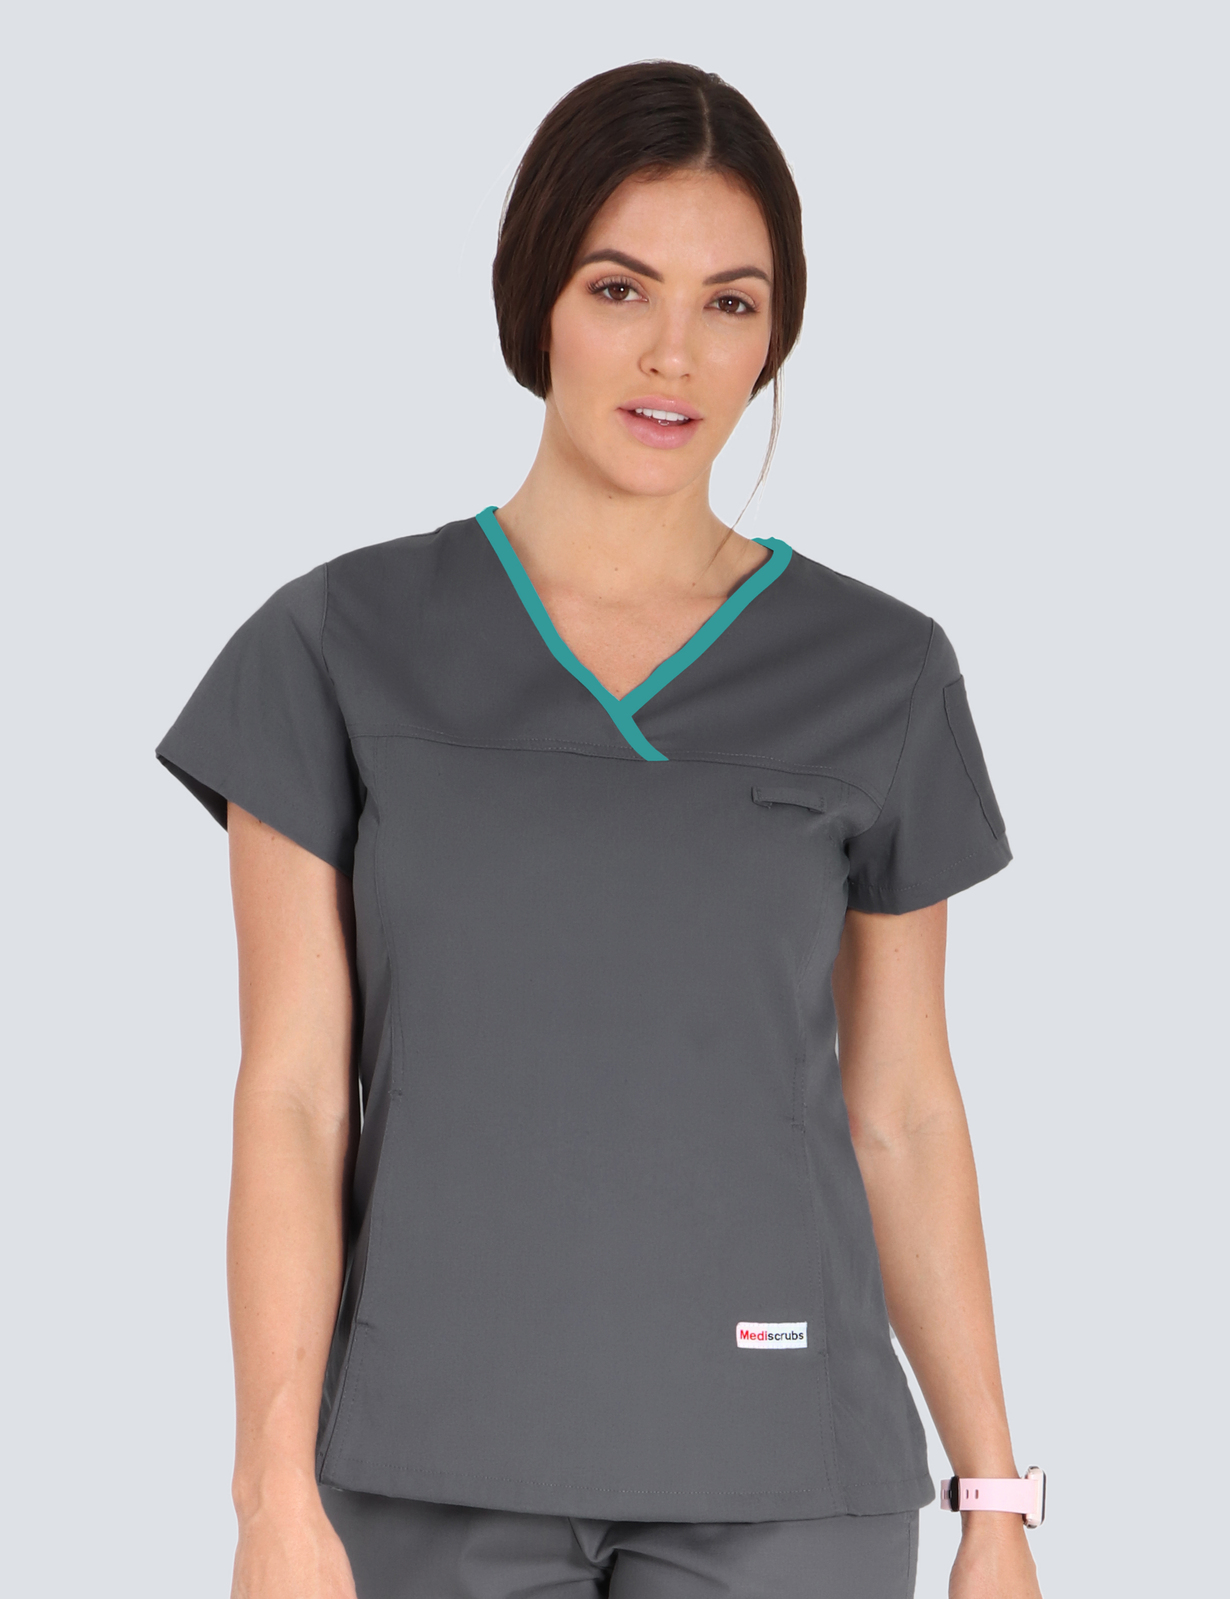 Northside Vets - Nurses (Women's Fit Solid Scrub Top in Steel Grey with Teal Trim incl Logos)